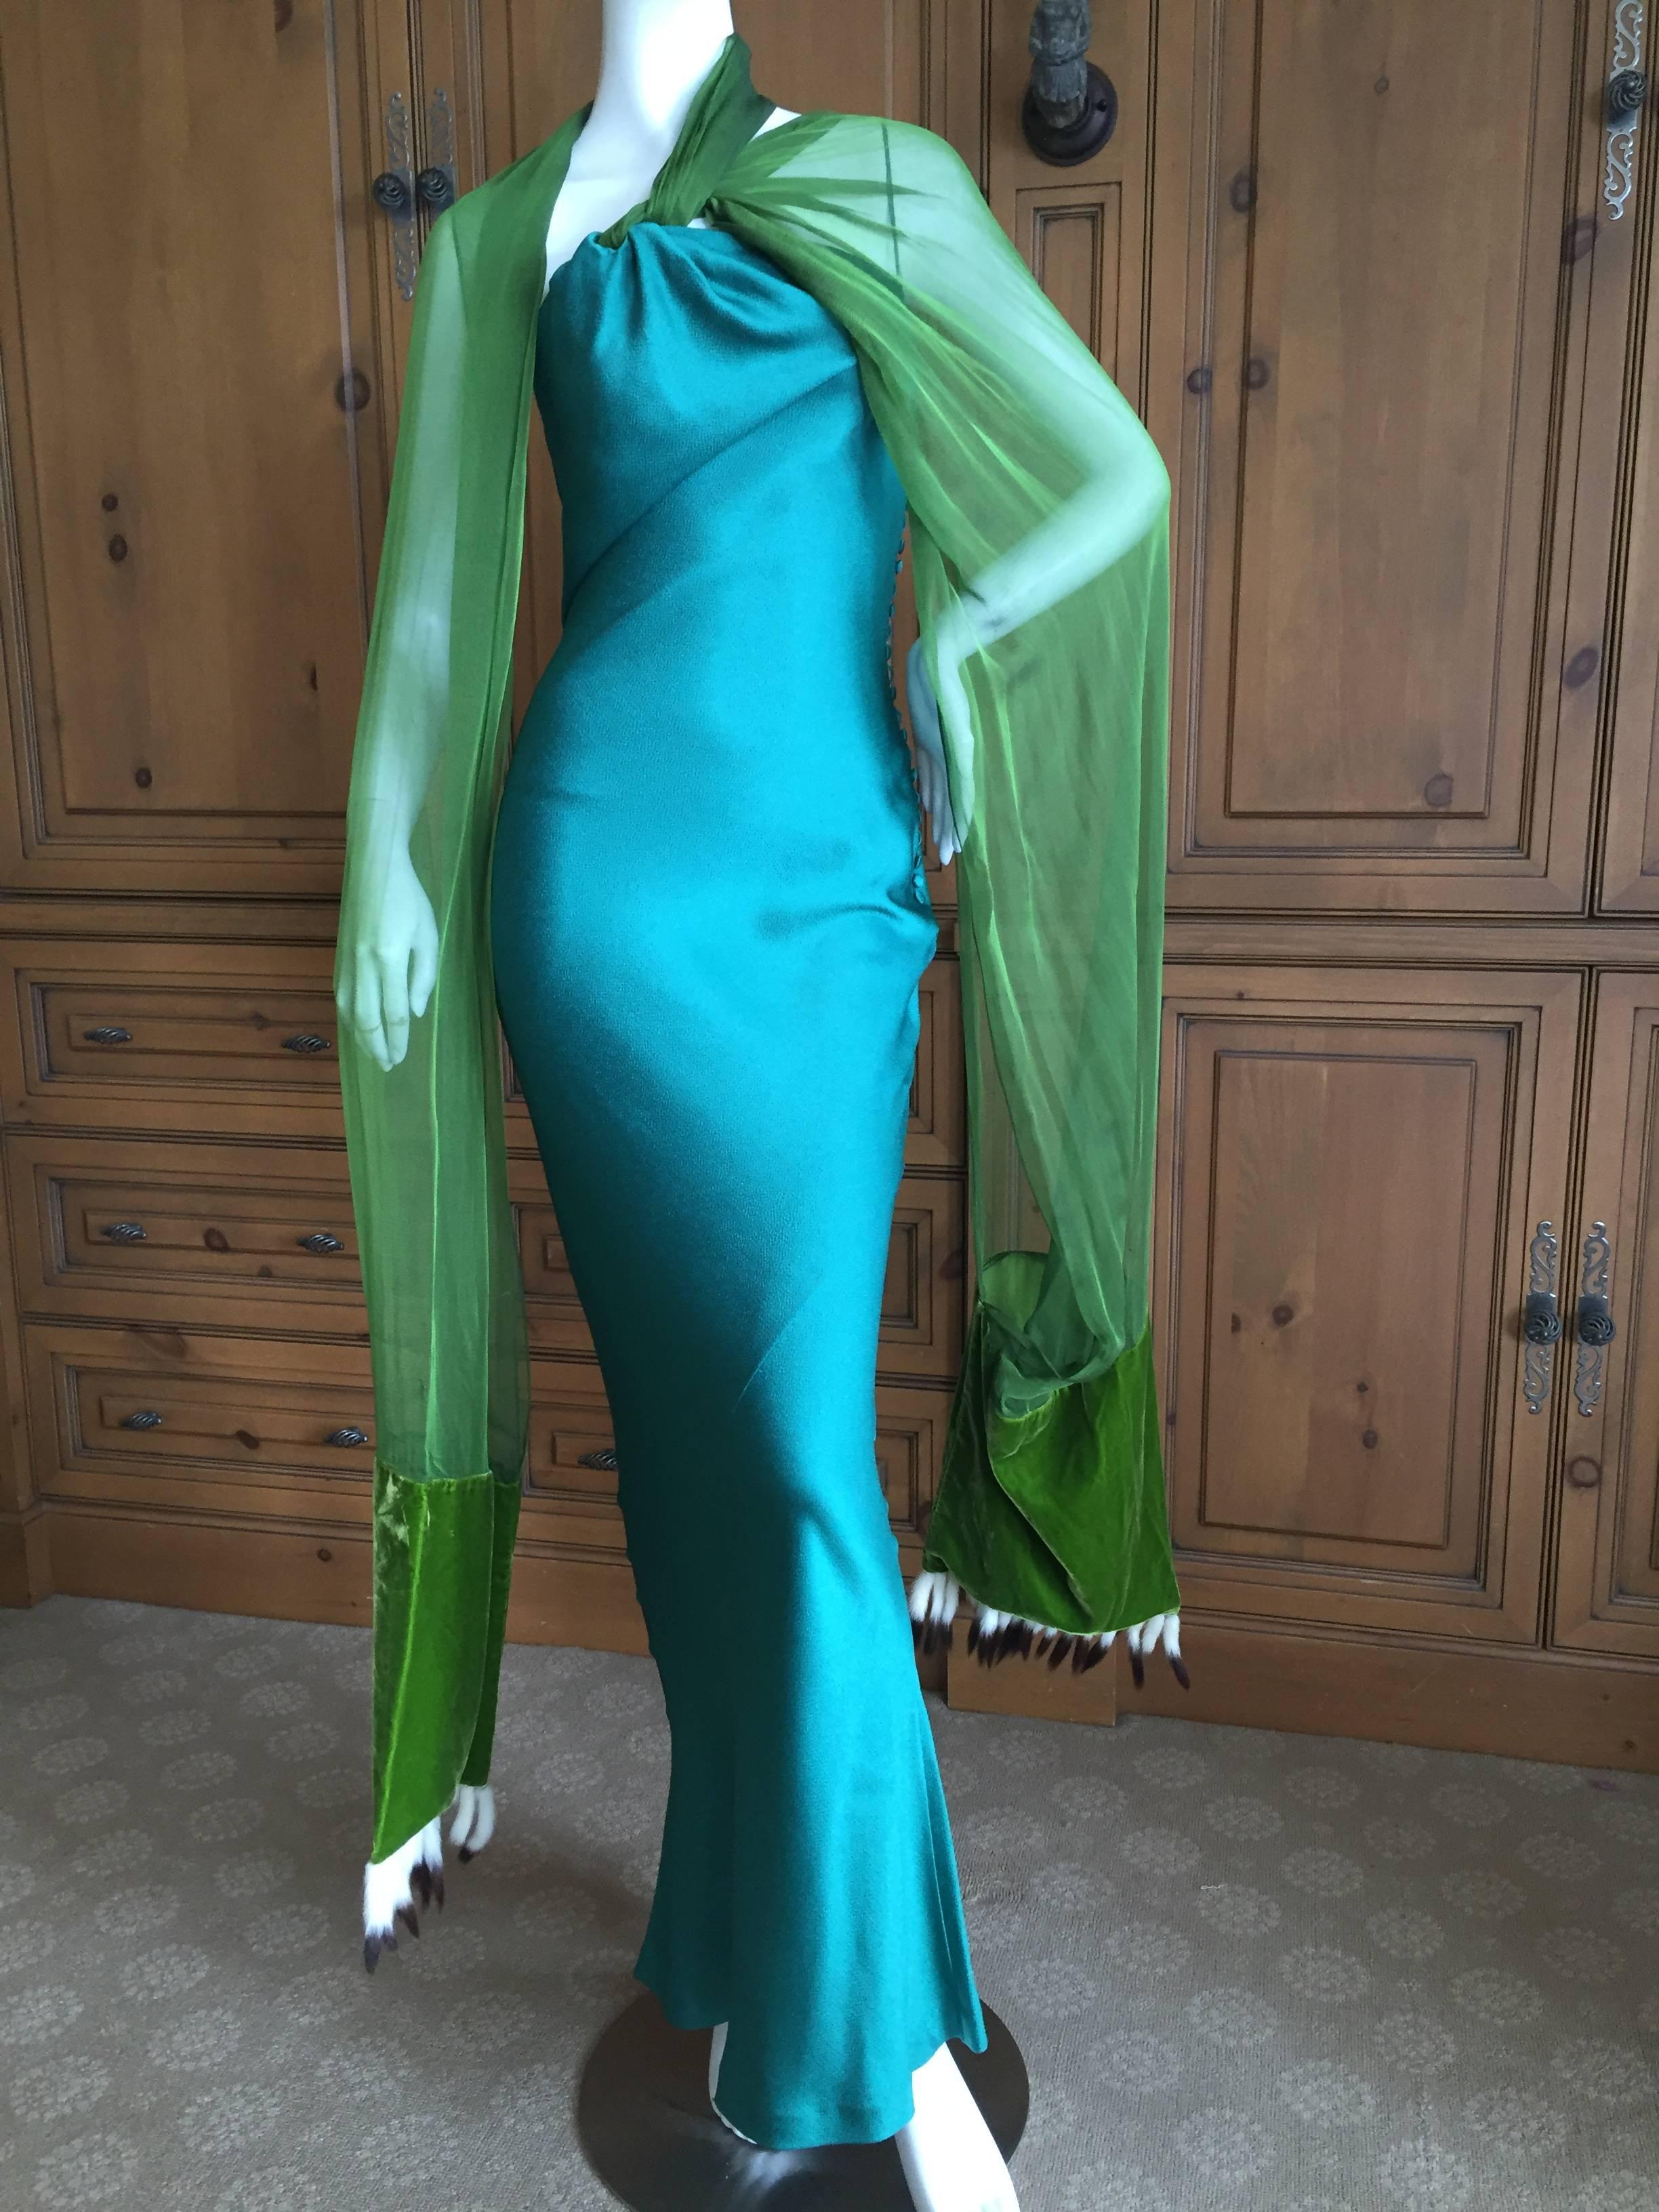 Christian Dior by Galliano Bias Cut Green Dress w Ermine Tail Trim Scarves 1990s 2